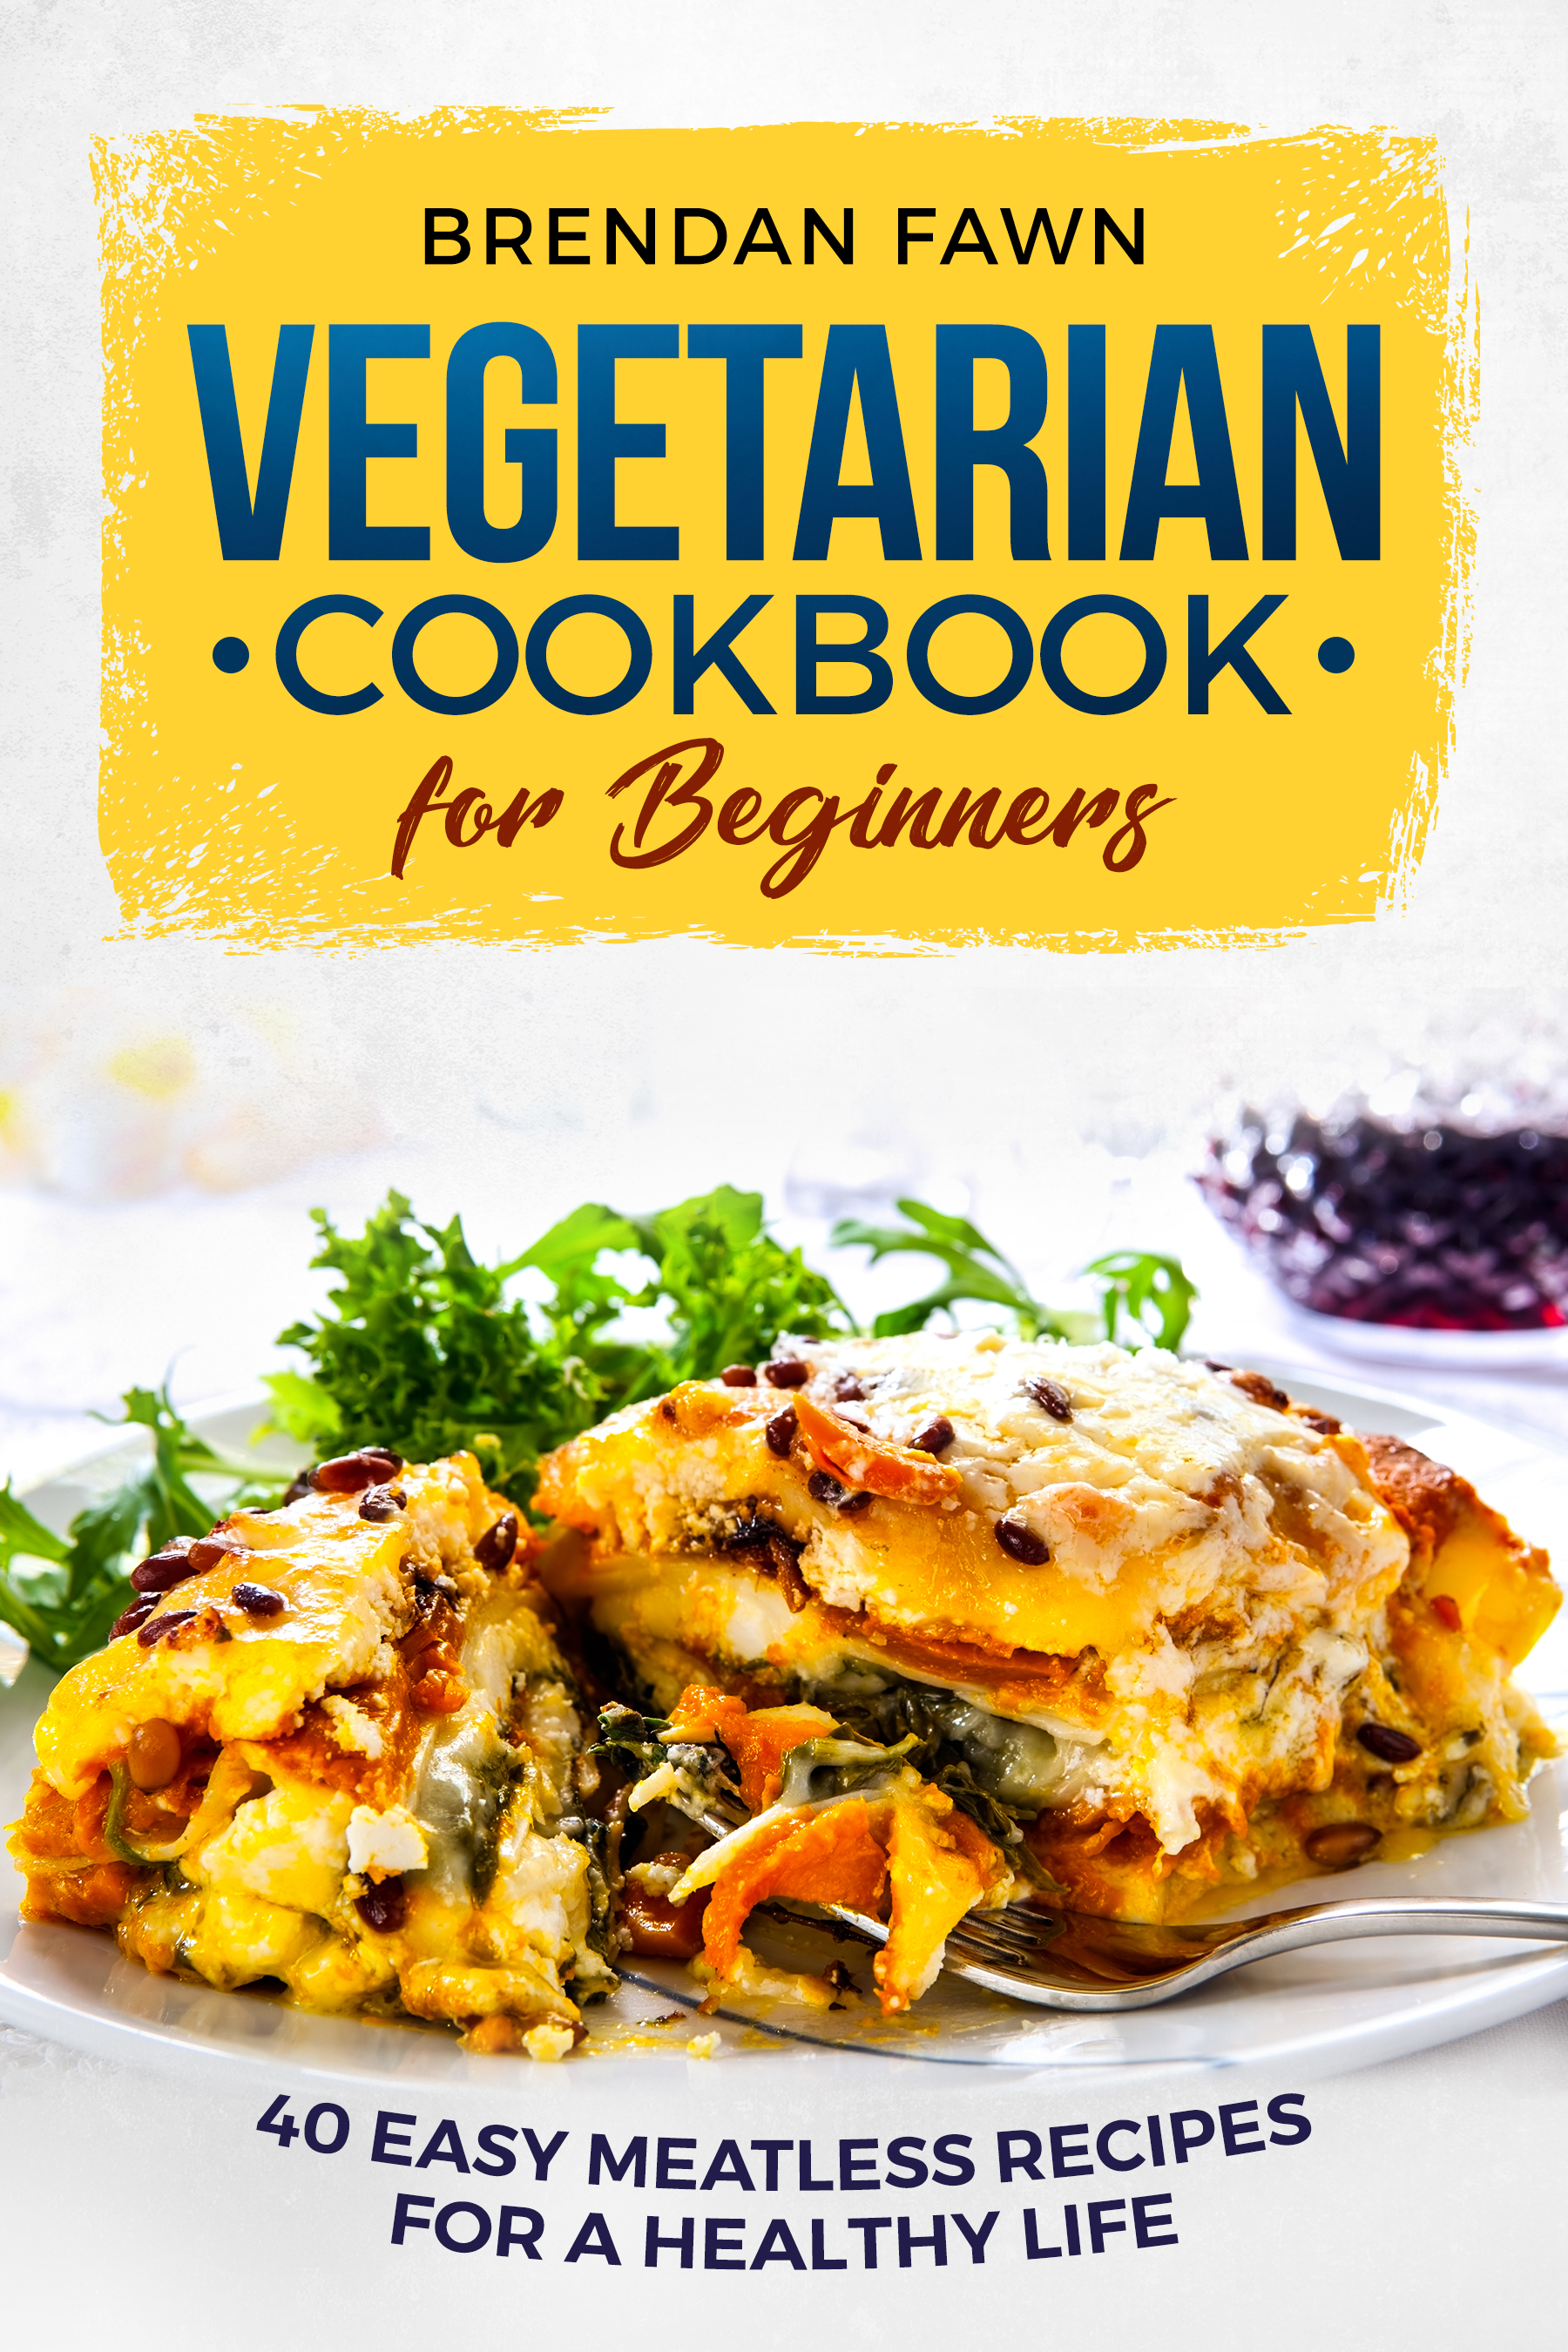 FREE: Vegetarian Cookbook for Beginners by Brendan Fawn